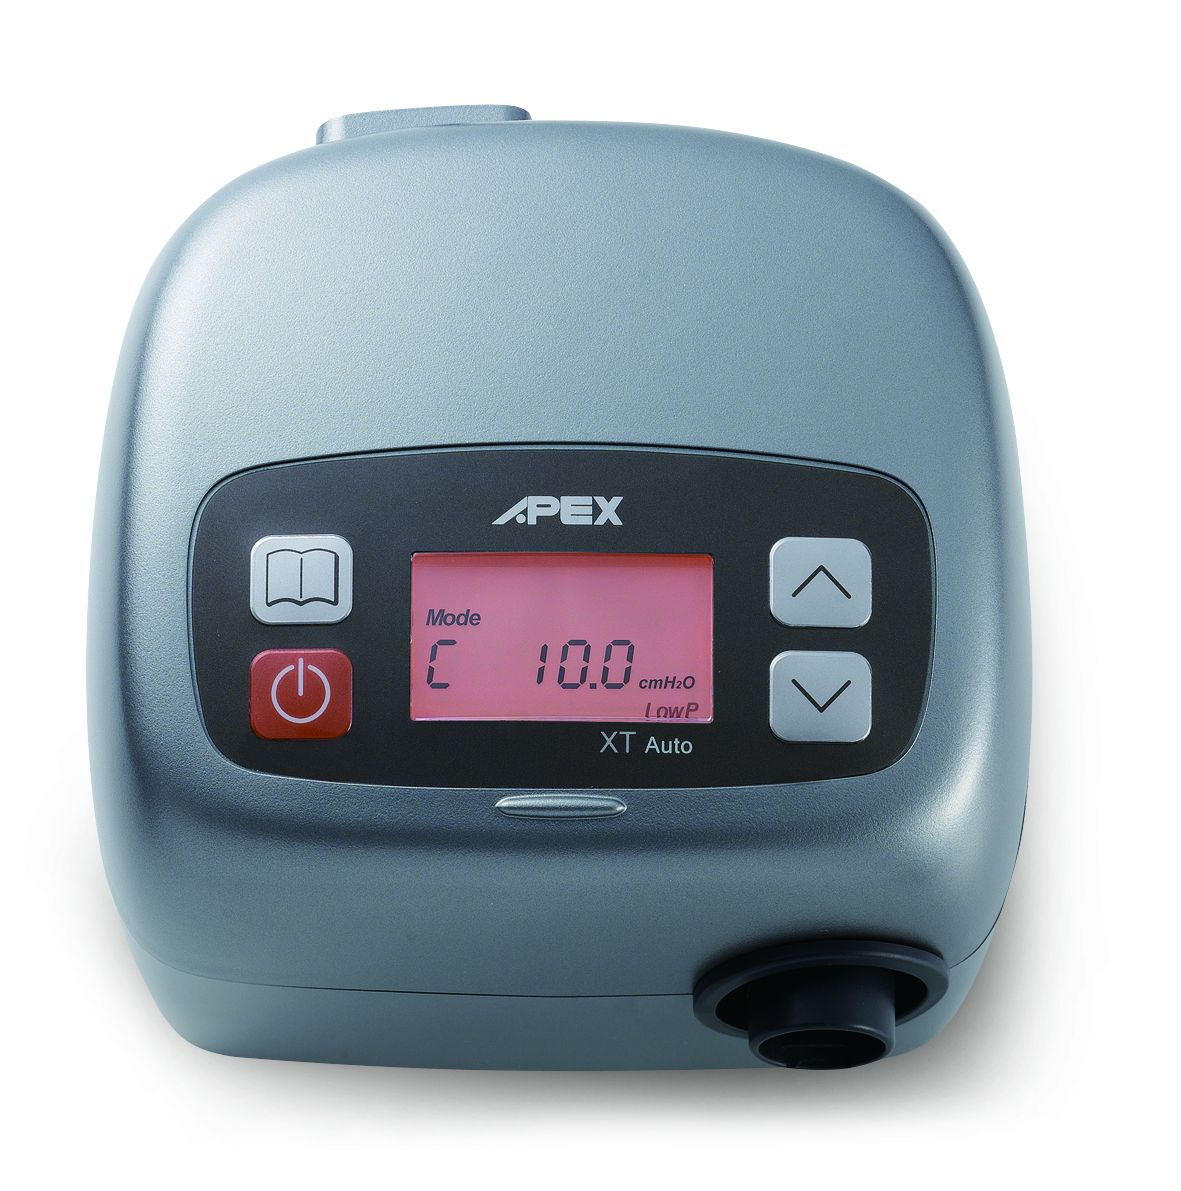  APEX XT Fit Manual CPAP Machine